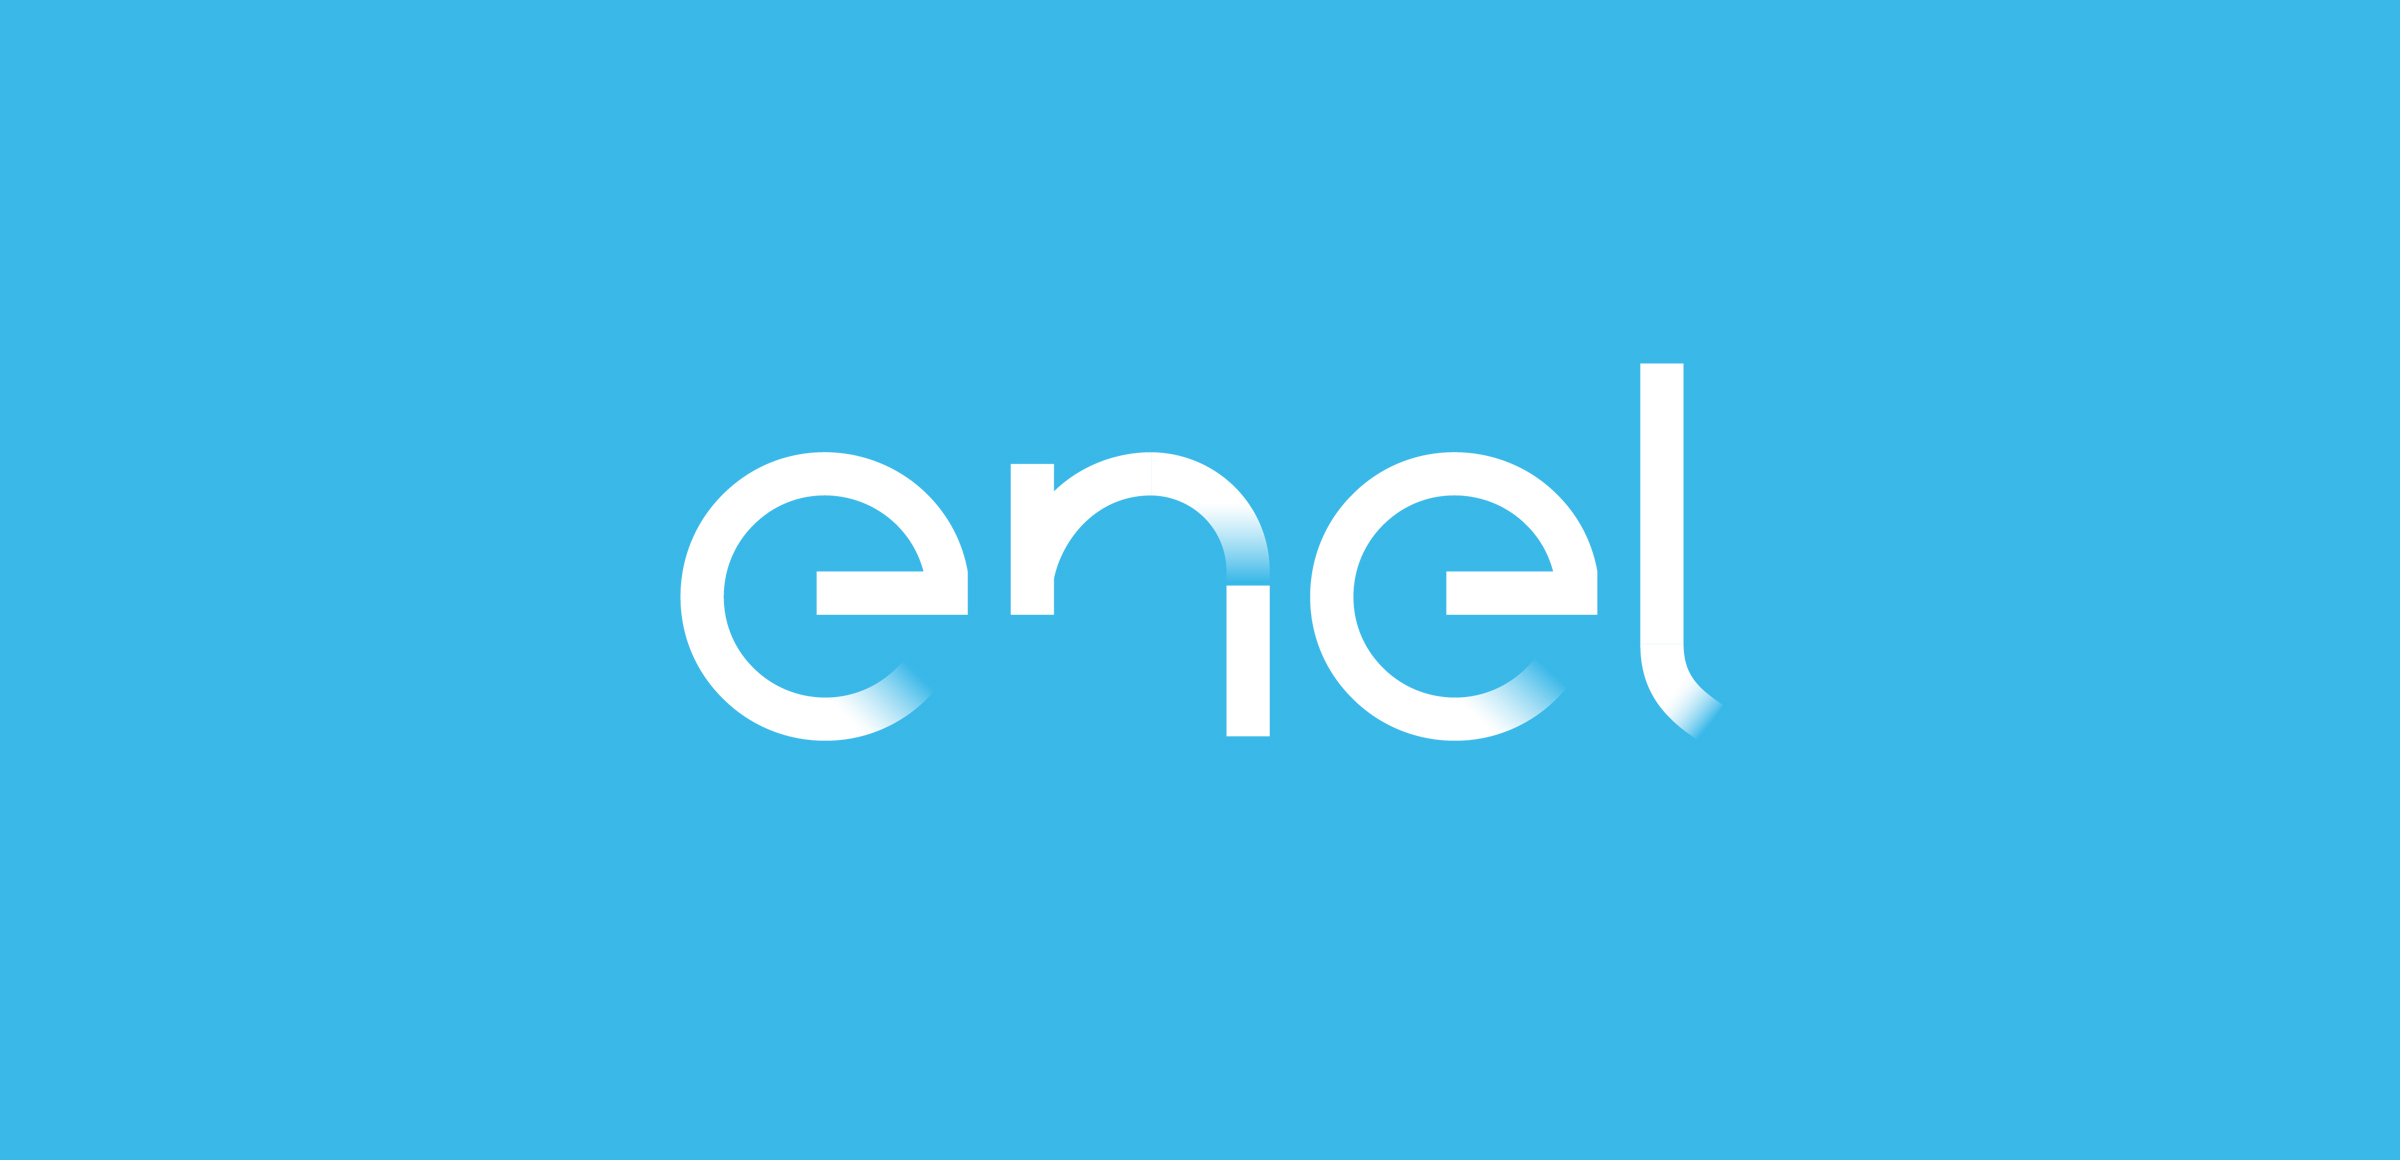 https://www.enel.com/content/dam/enel-com/immagini/enel-logo/enel-logo-sfondo-celeste_2400x1160.jpg